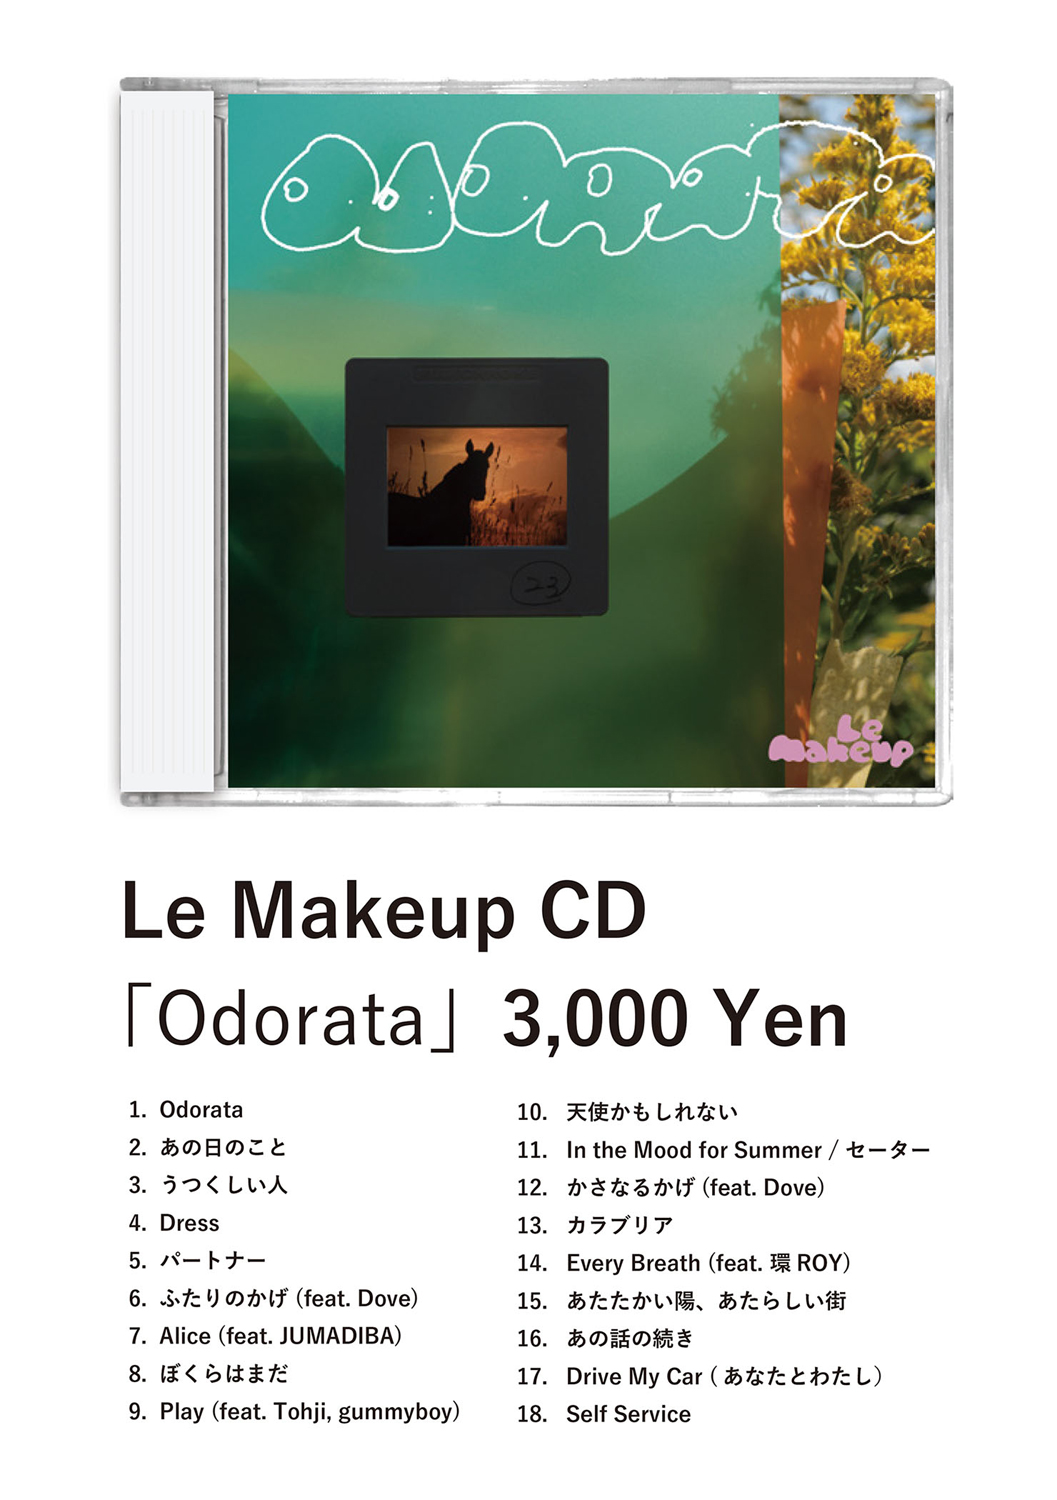 Le Makeup 'Odorata' CD